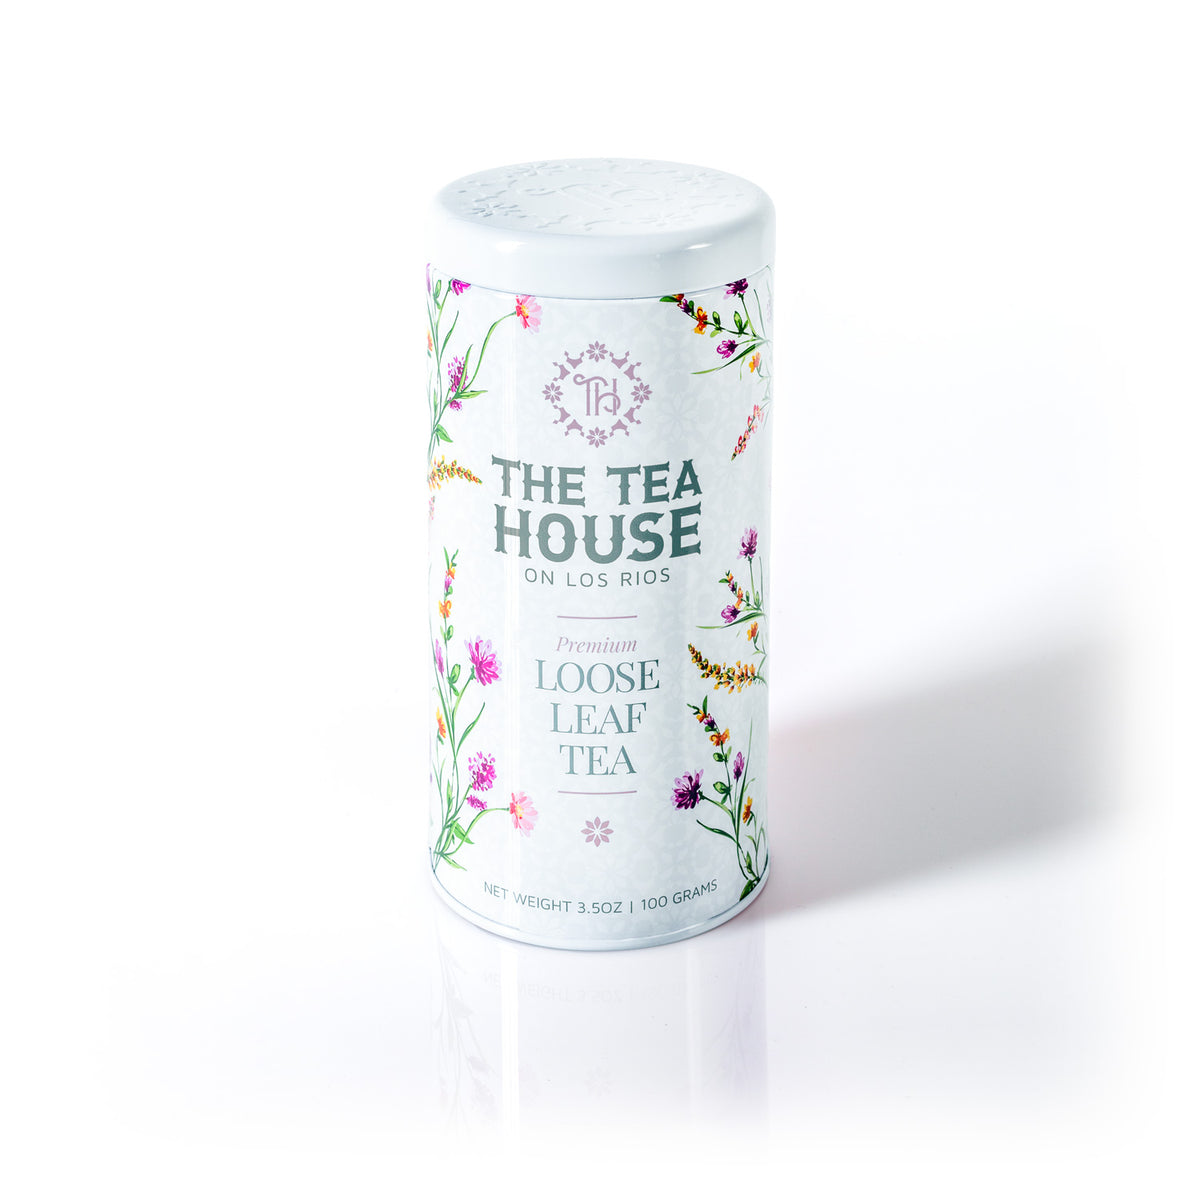 100g Loose Leaf Tea Tin from The Tea House on Los Rios - Fresh Stock